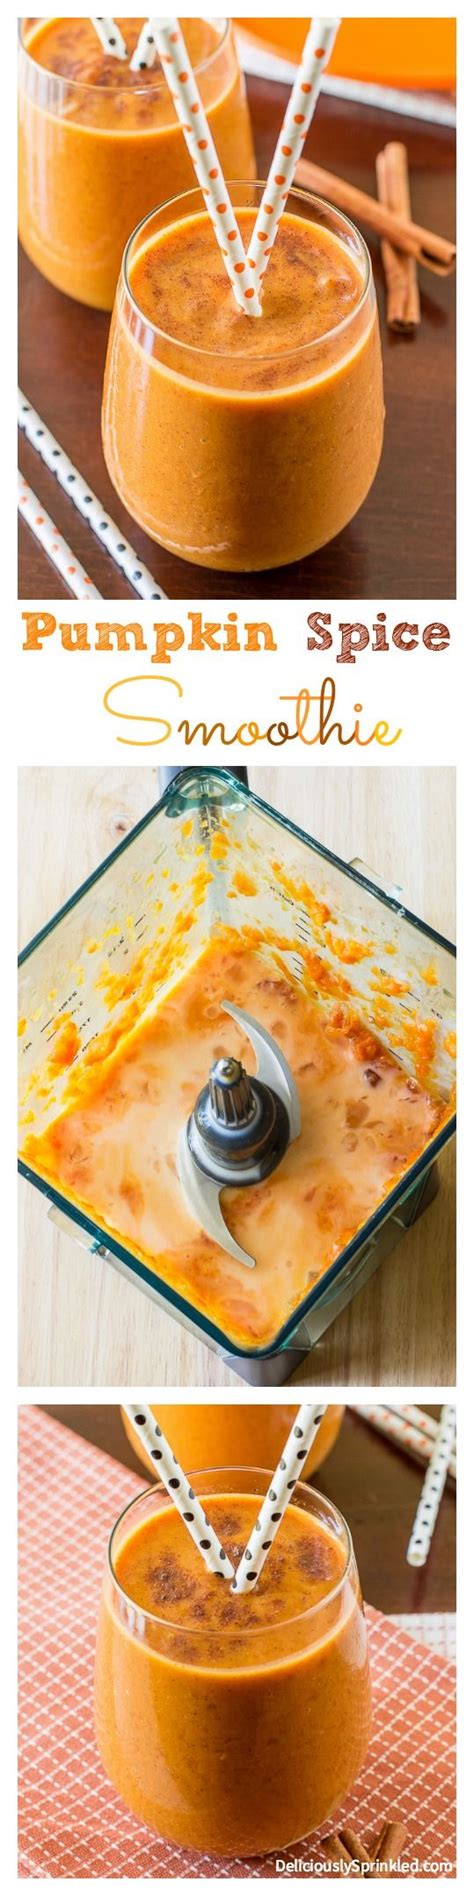 A Delicious Pumpkin Spice Smoothie Recipe By